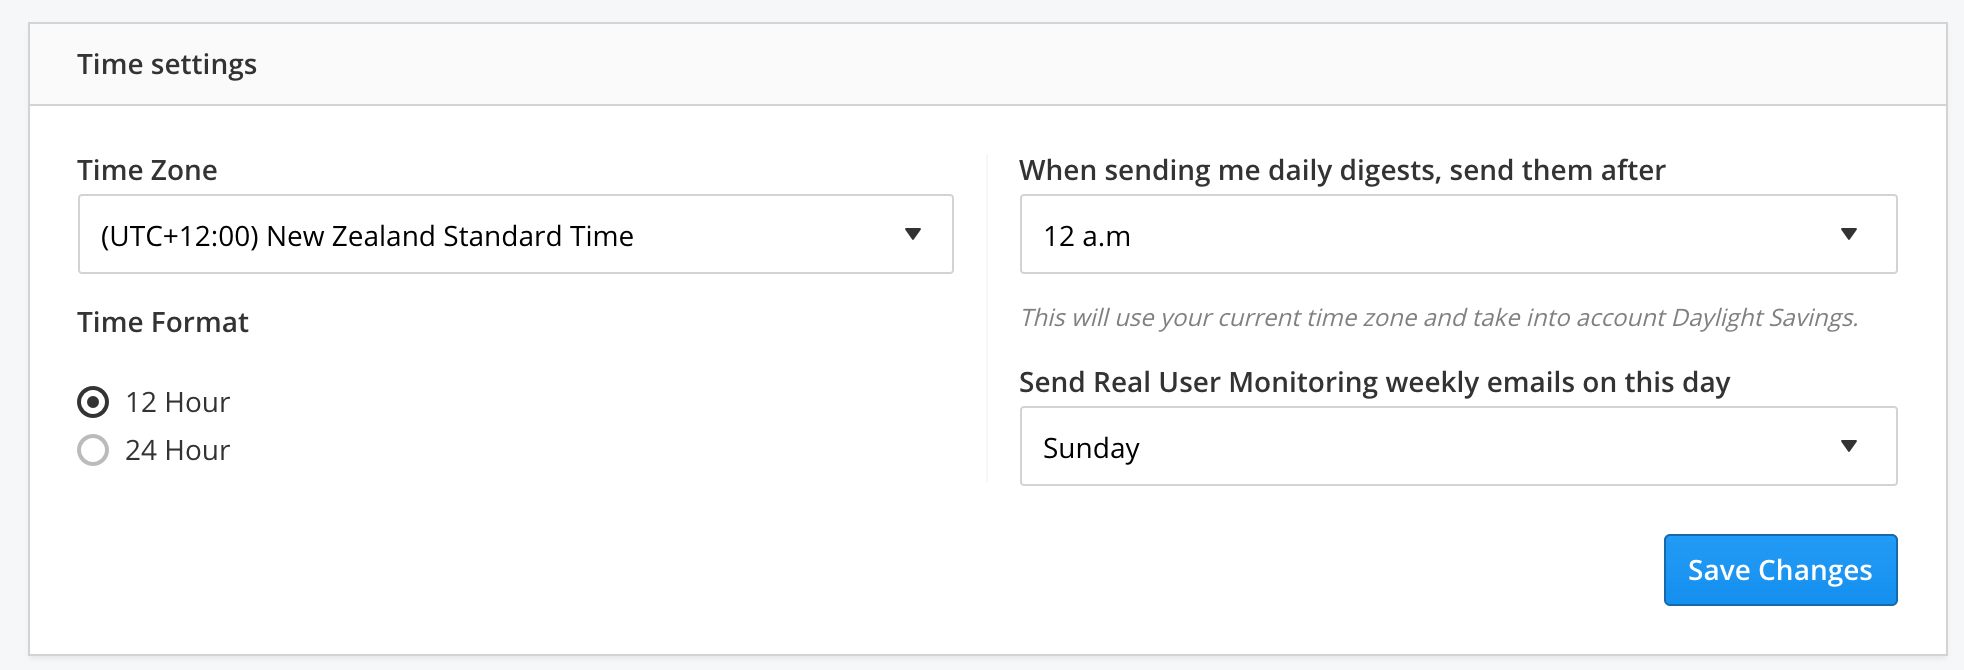 Time settings module screenshot